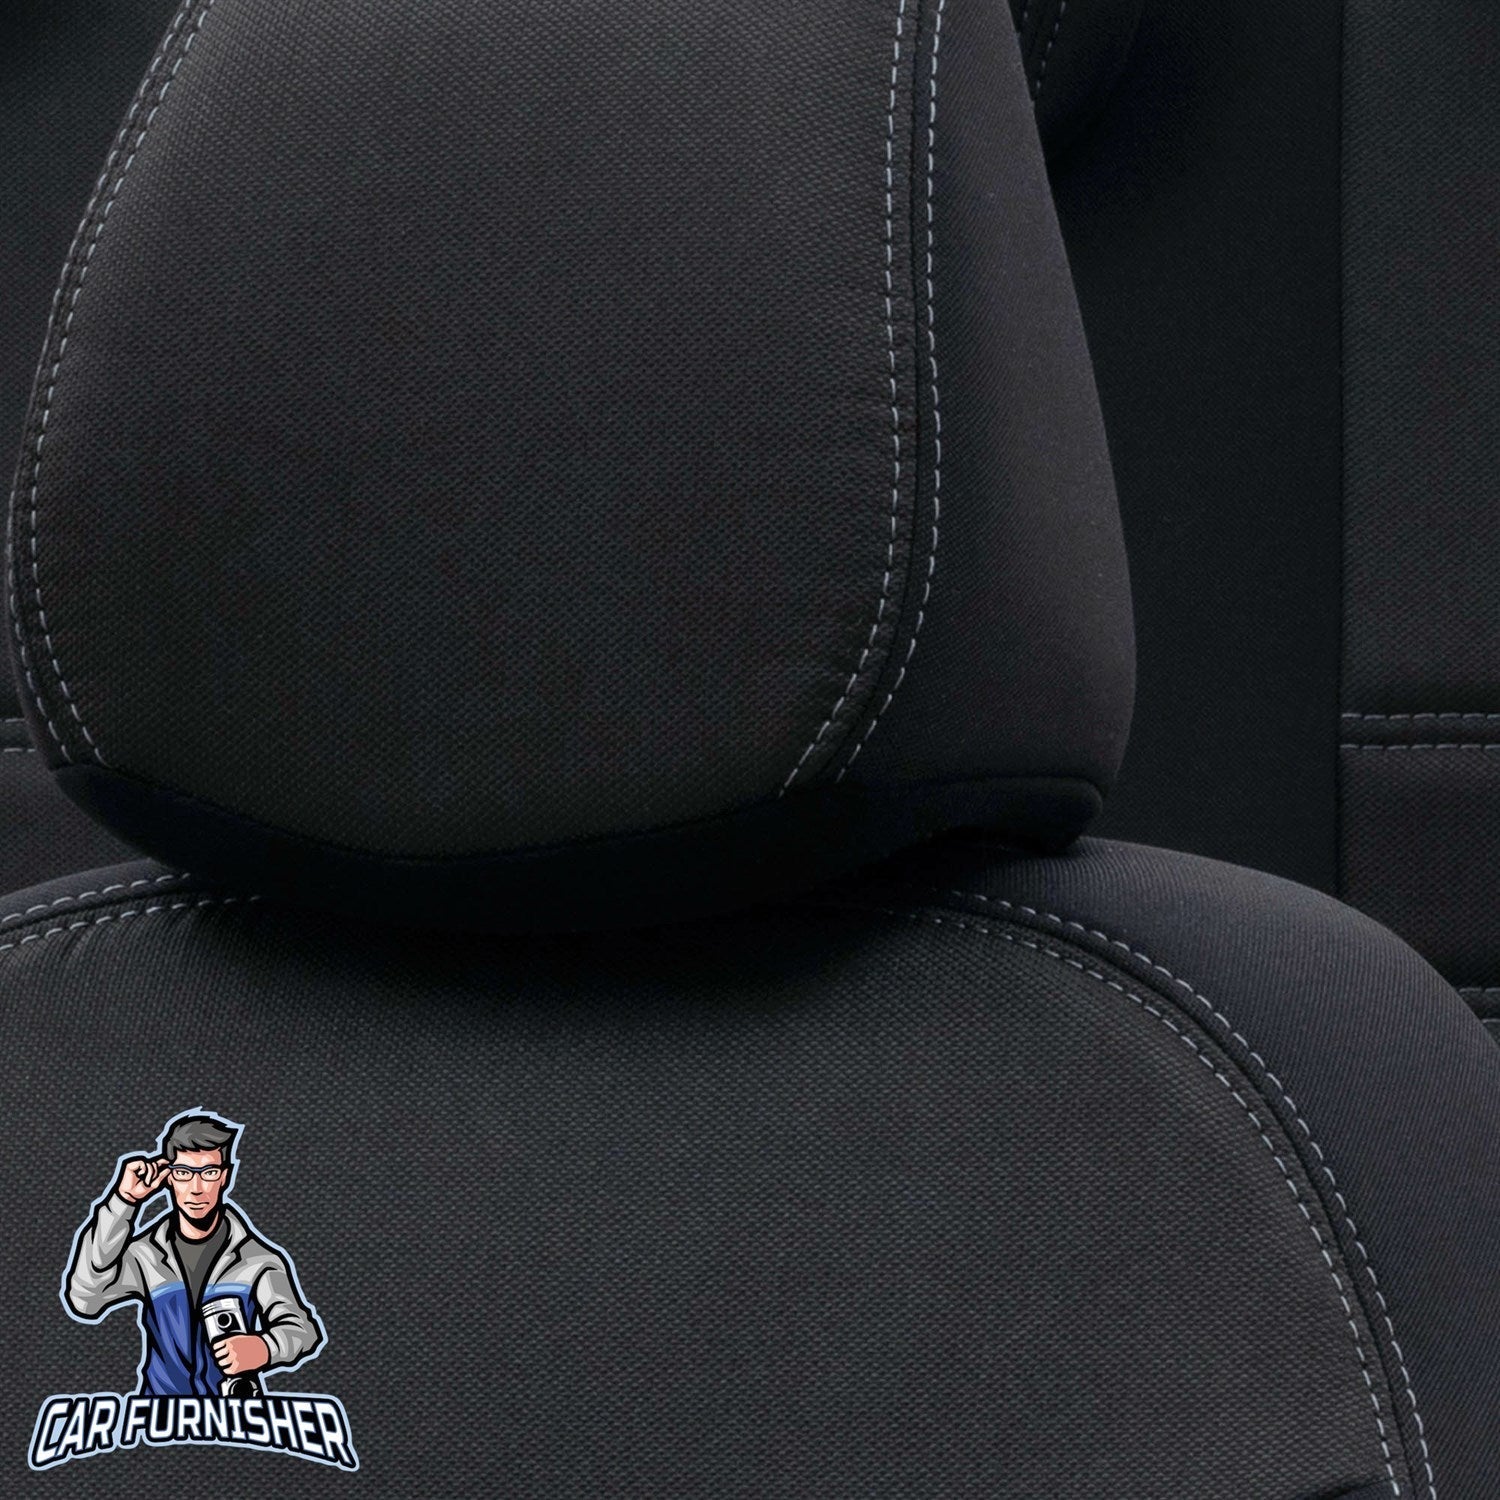 Tesla Model S Seat Cover Original Jacquard Design Black Jacquard Fabric